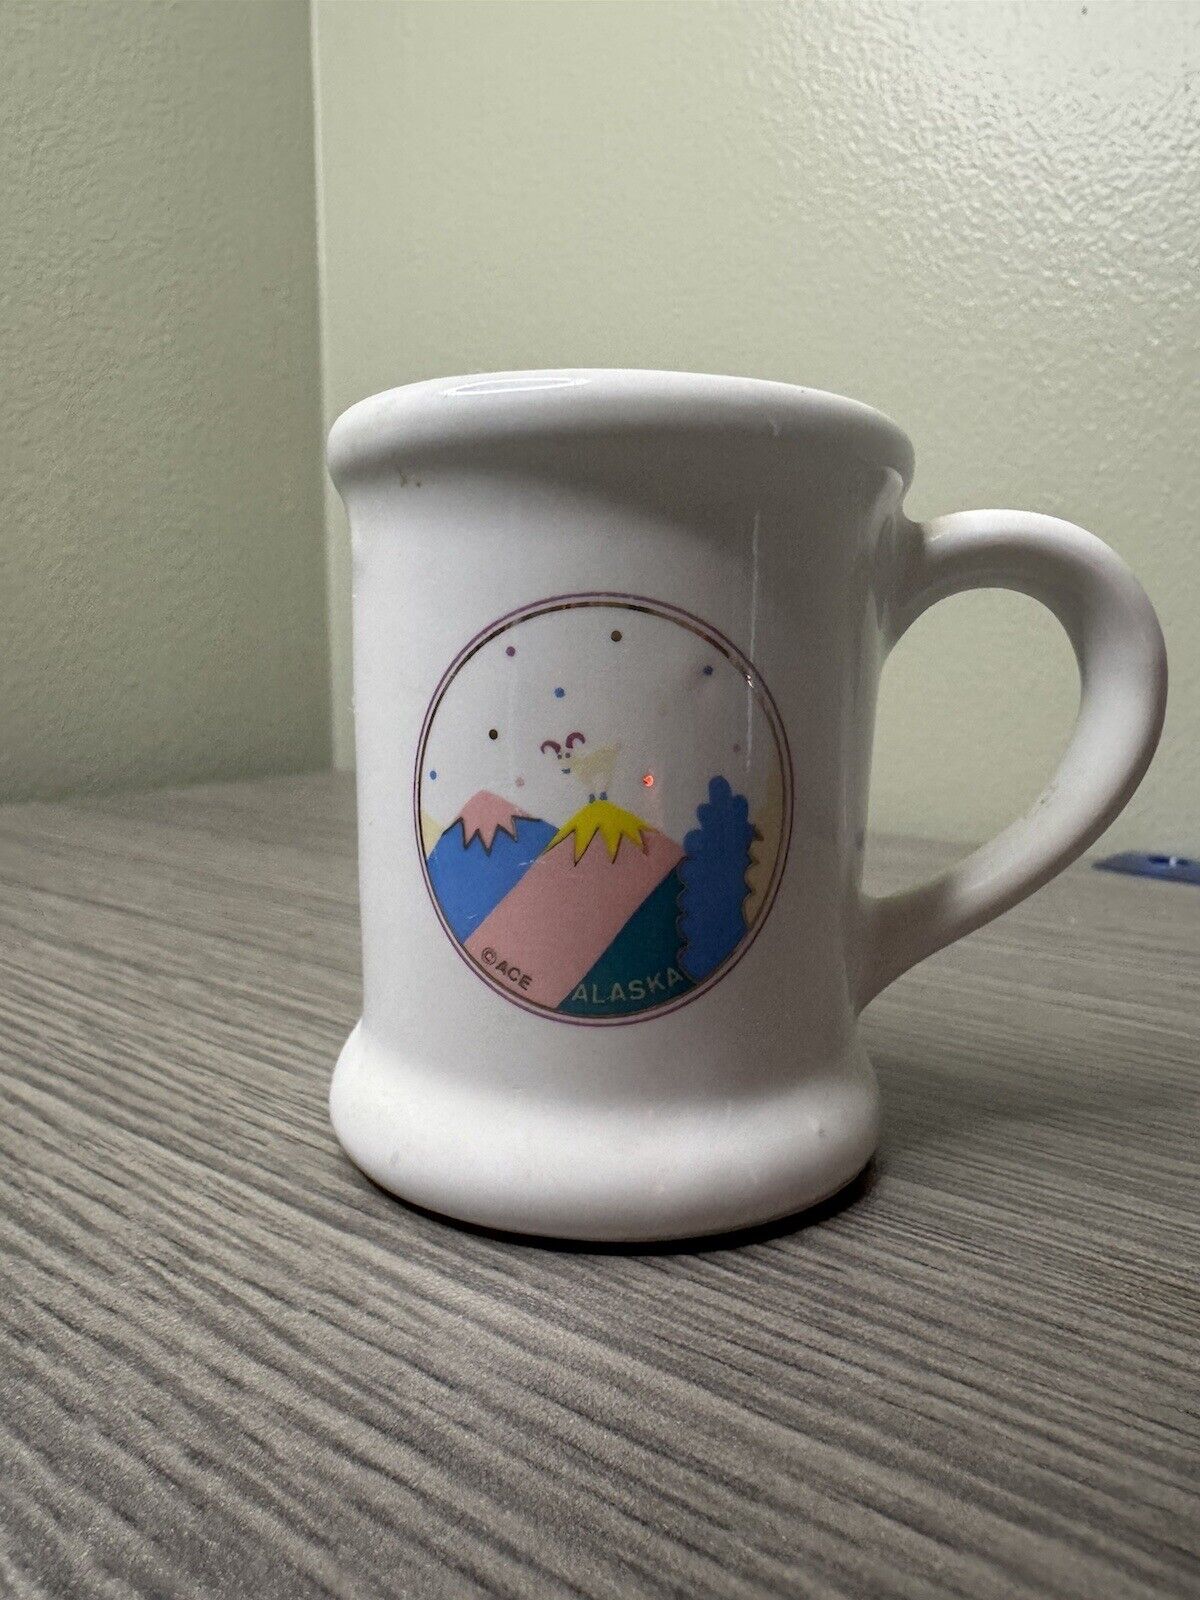 Vintage Miniature Alaska Souvenir Mug - Colorful Mountain Design